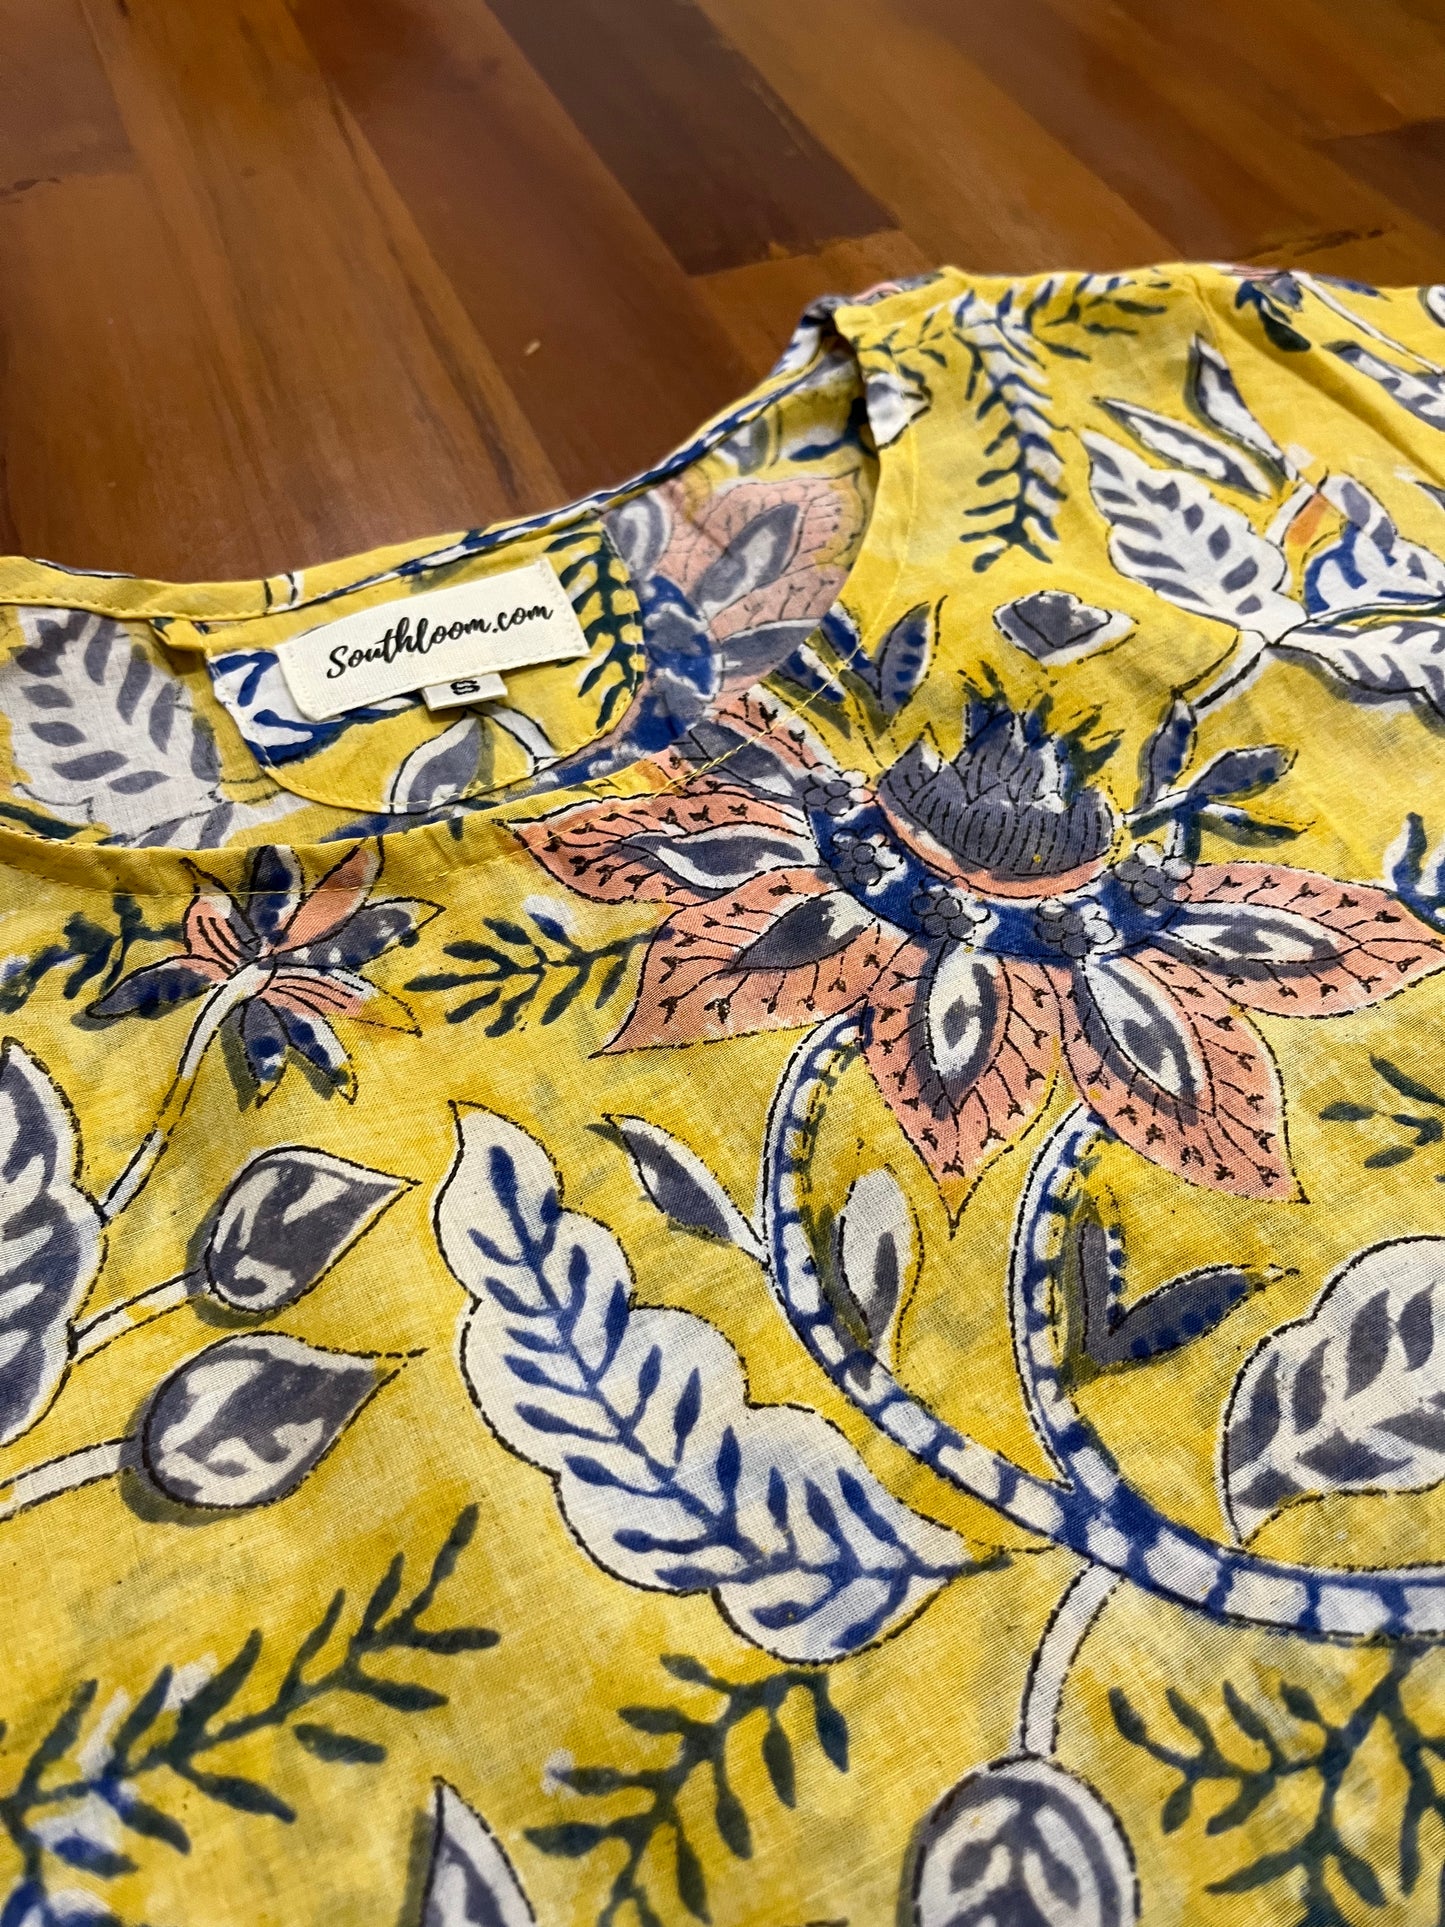 Southloom Jaipur Cotton Floral Hand Block Printed Yellow Top (Half Sleeves)